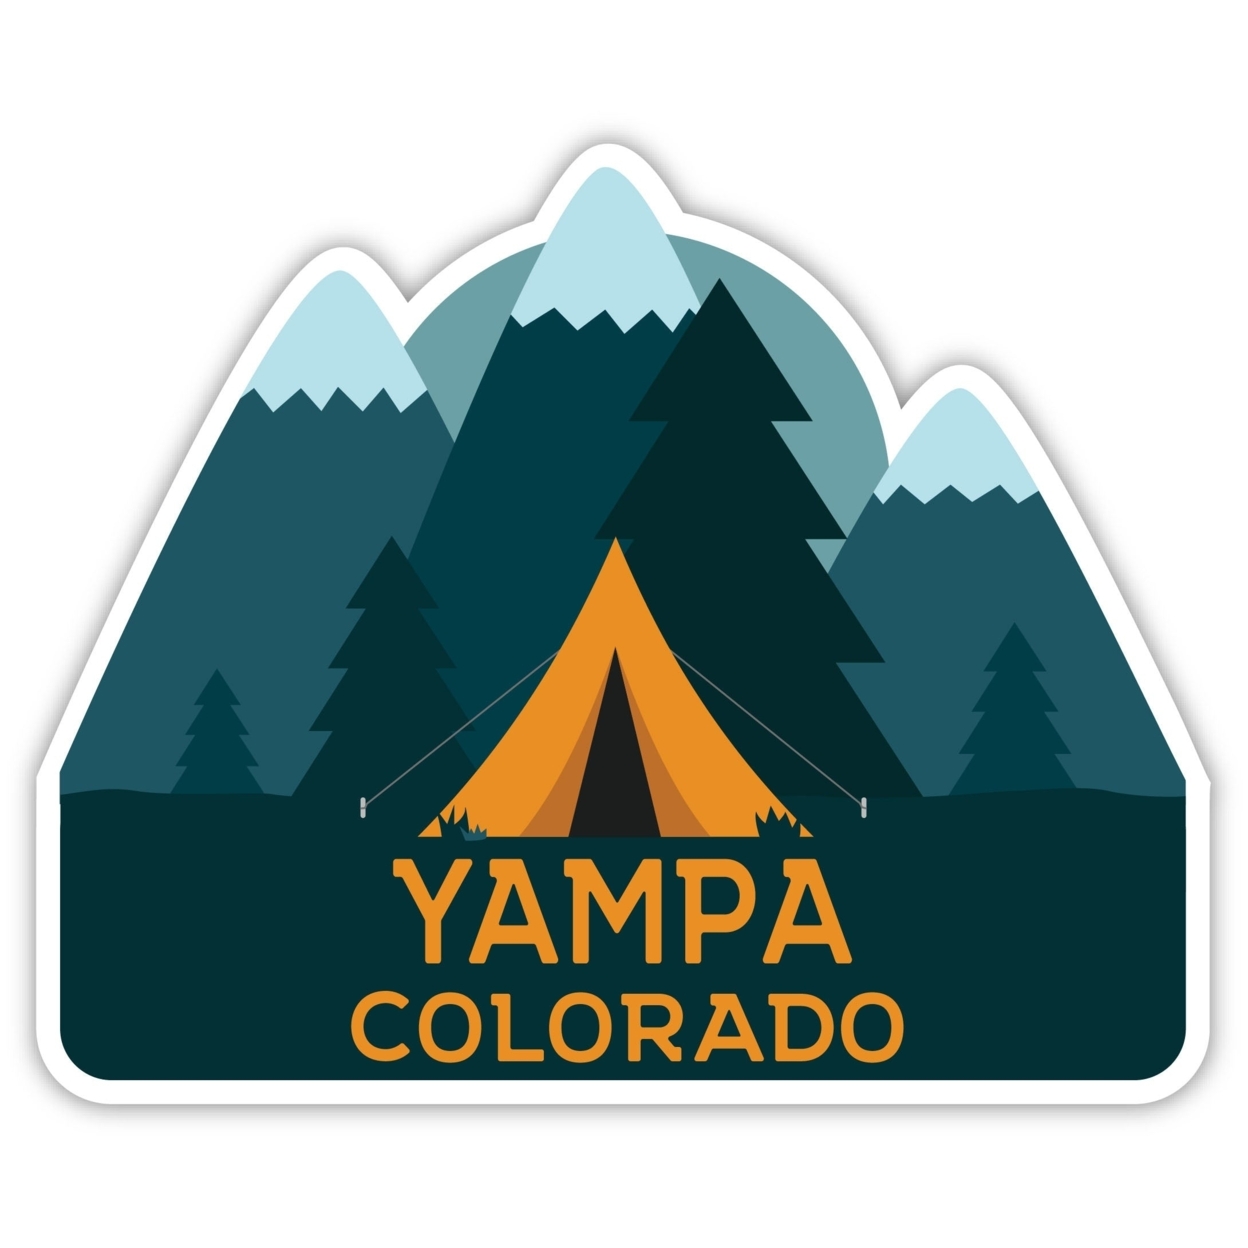 Yampa Colorado Souvenir Decorative Stickers (Choose Theme And Size) - Single Unit, 2-Inch, Tent